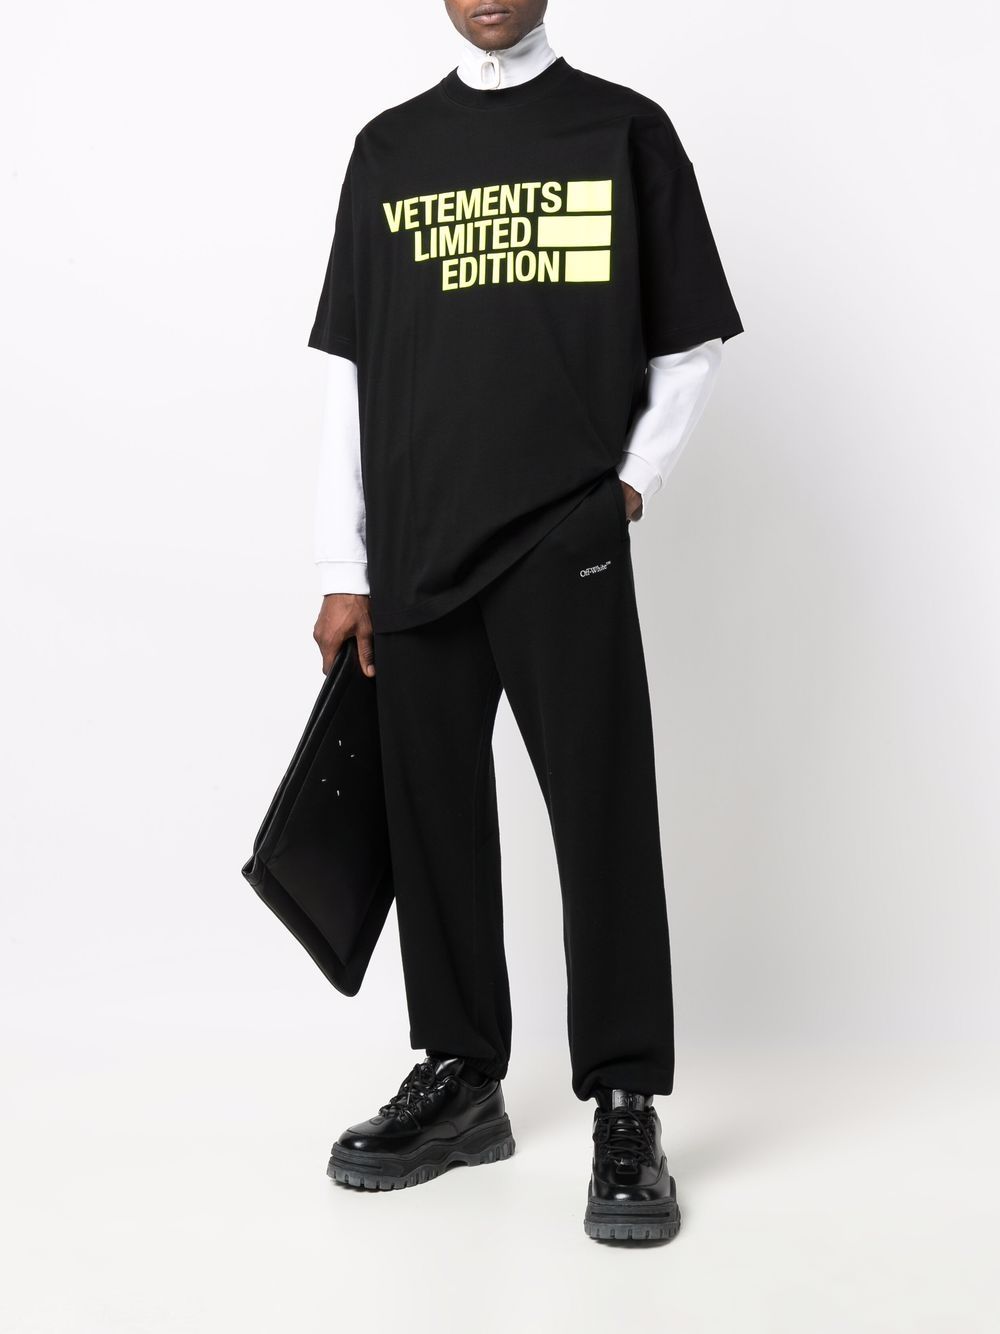 VETEMENTS Limited Edition Slogan T-Shirt Black - MAISONDEFASHION.COM